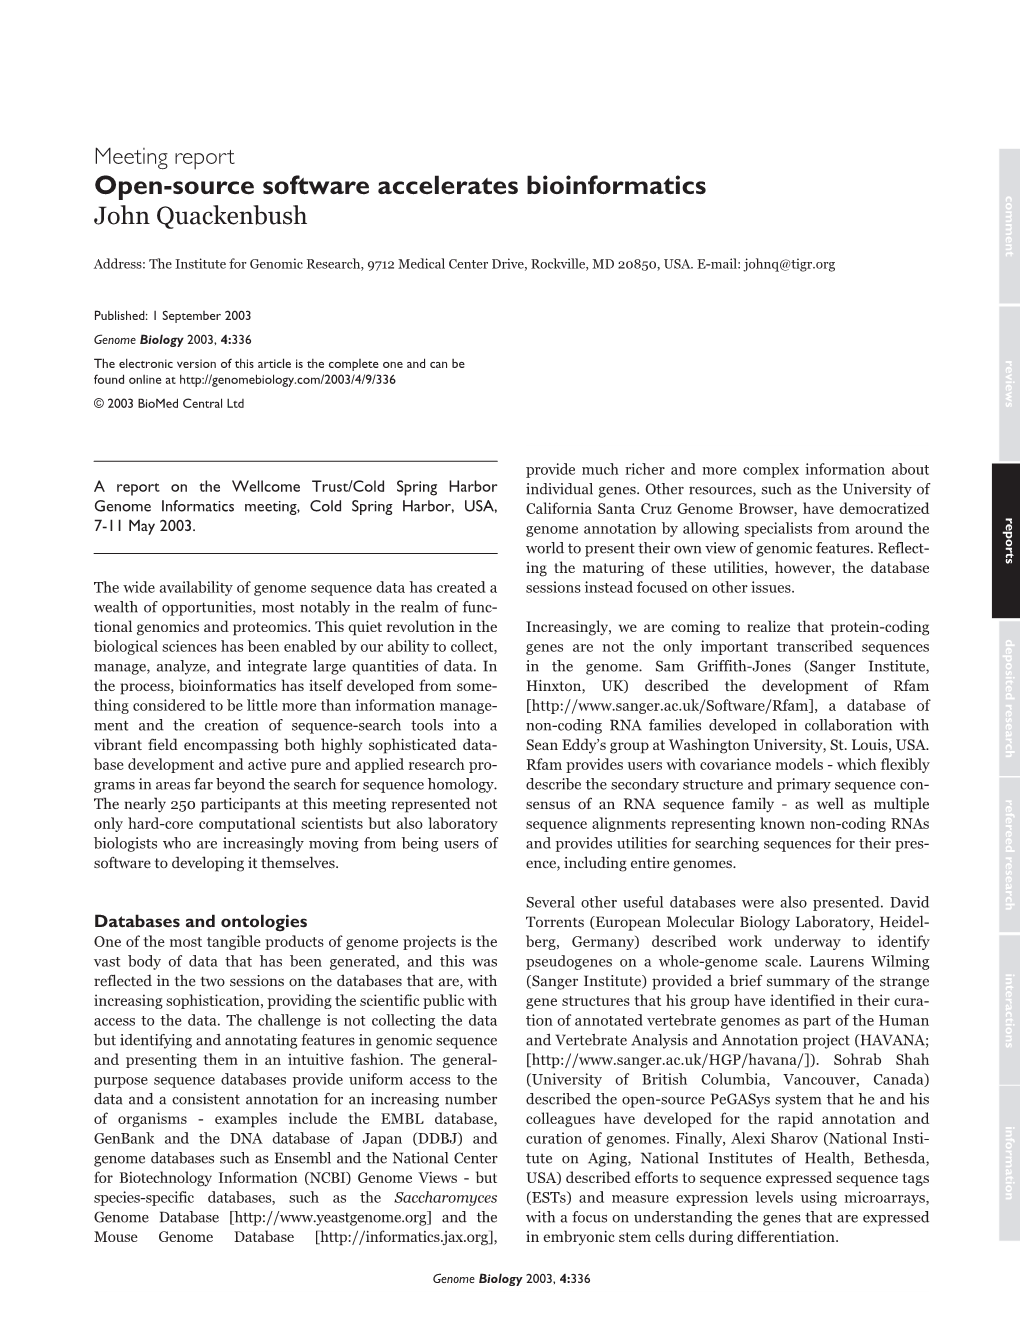 Open-Source Software Accelerates Bioinformatics Comment John Quackenbush